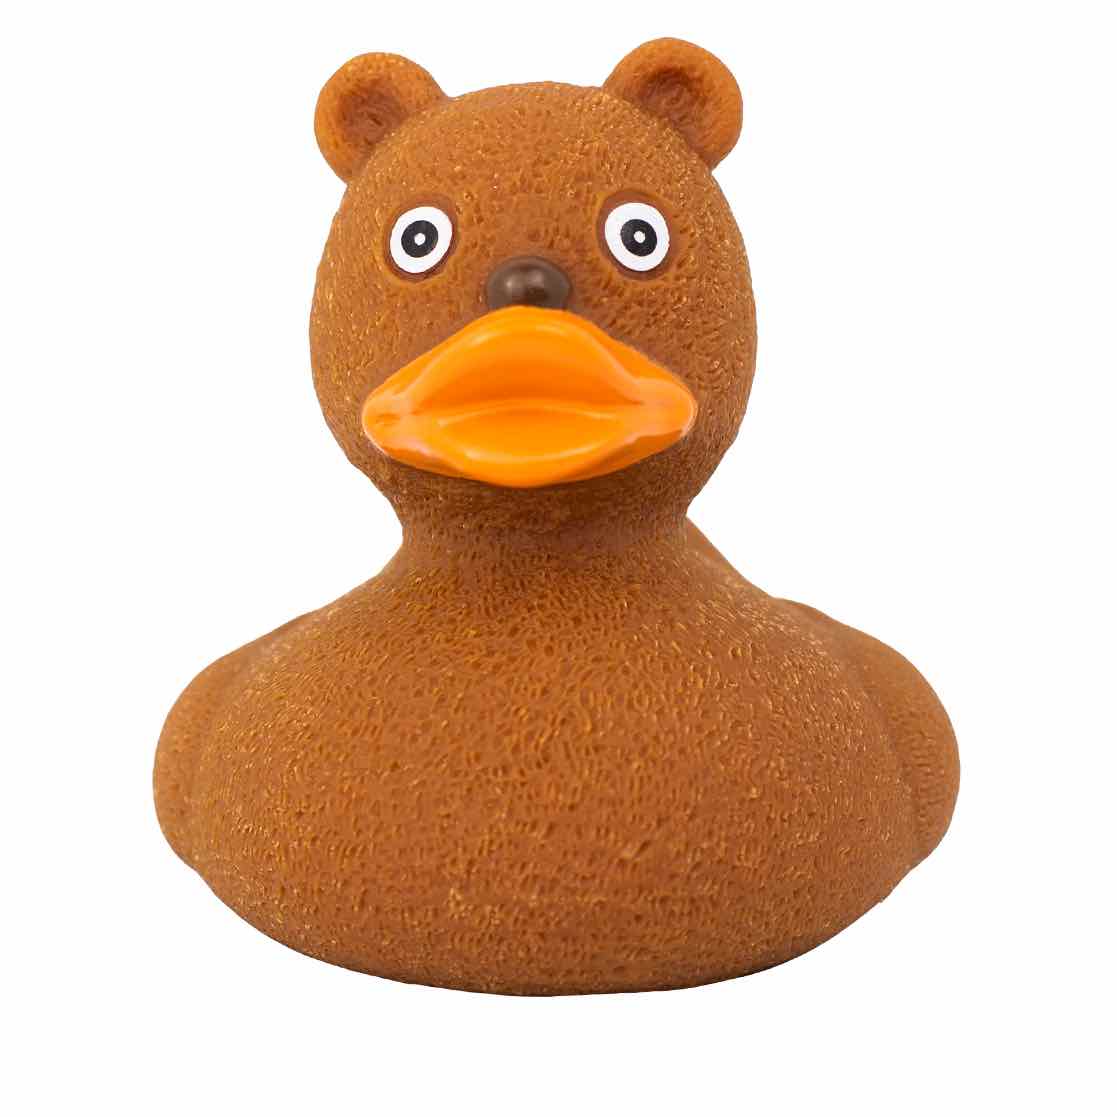 Teddy Rubber Duck | Buy premium rubber ducks online - world wide